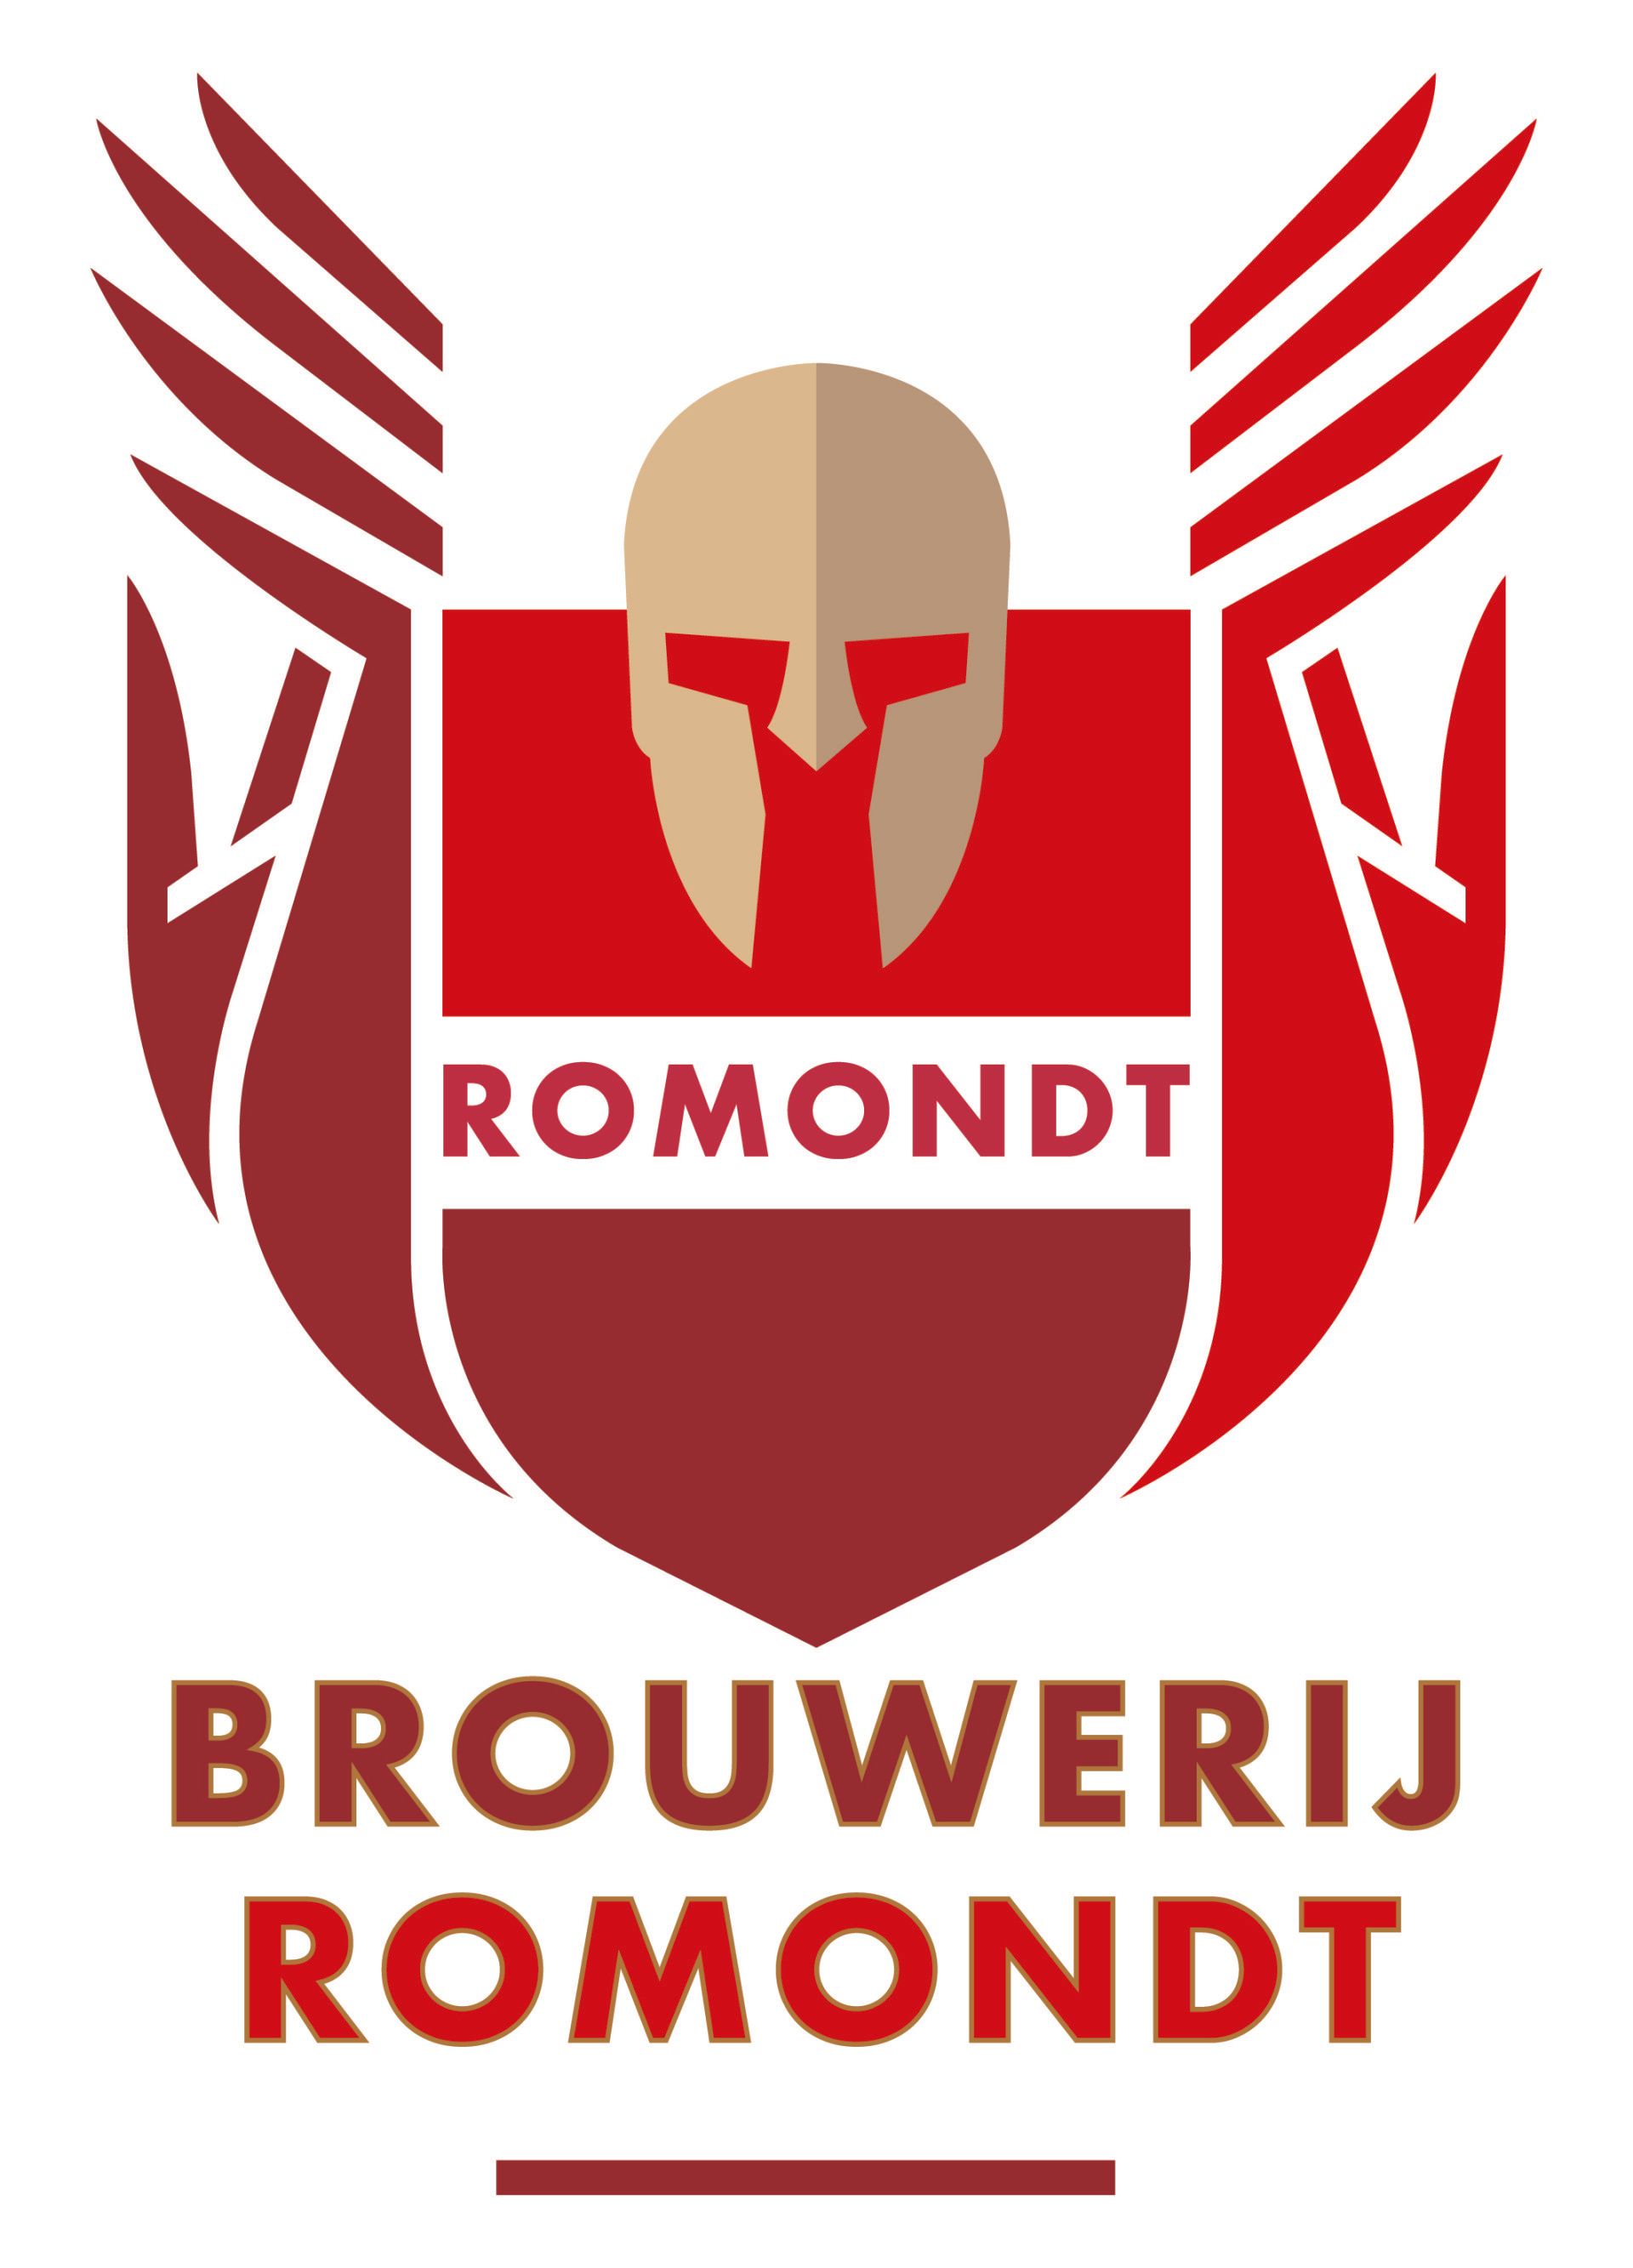 Brouwerij Romondt logo